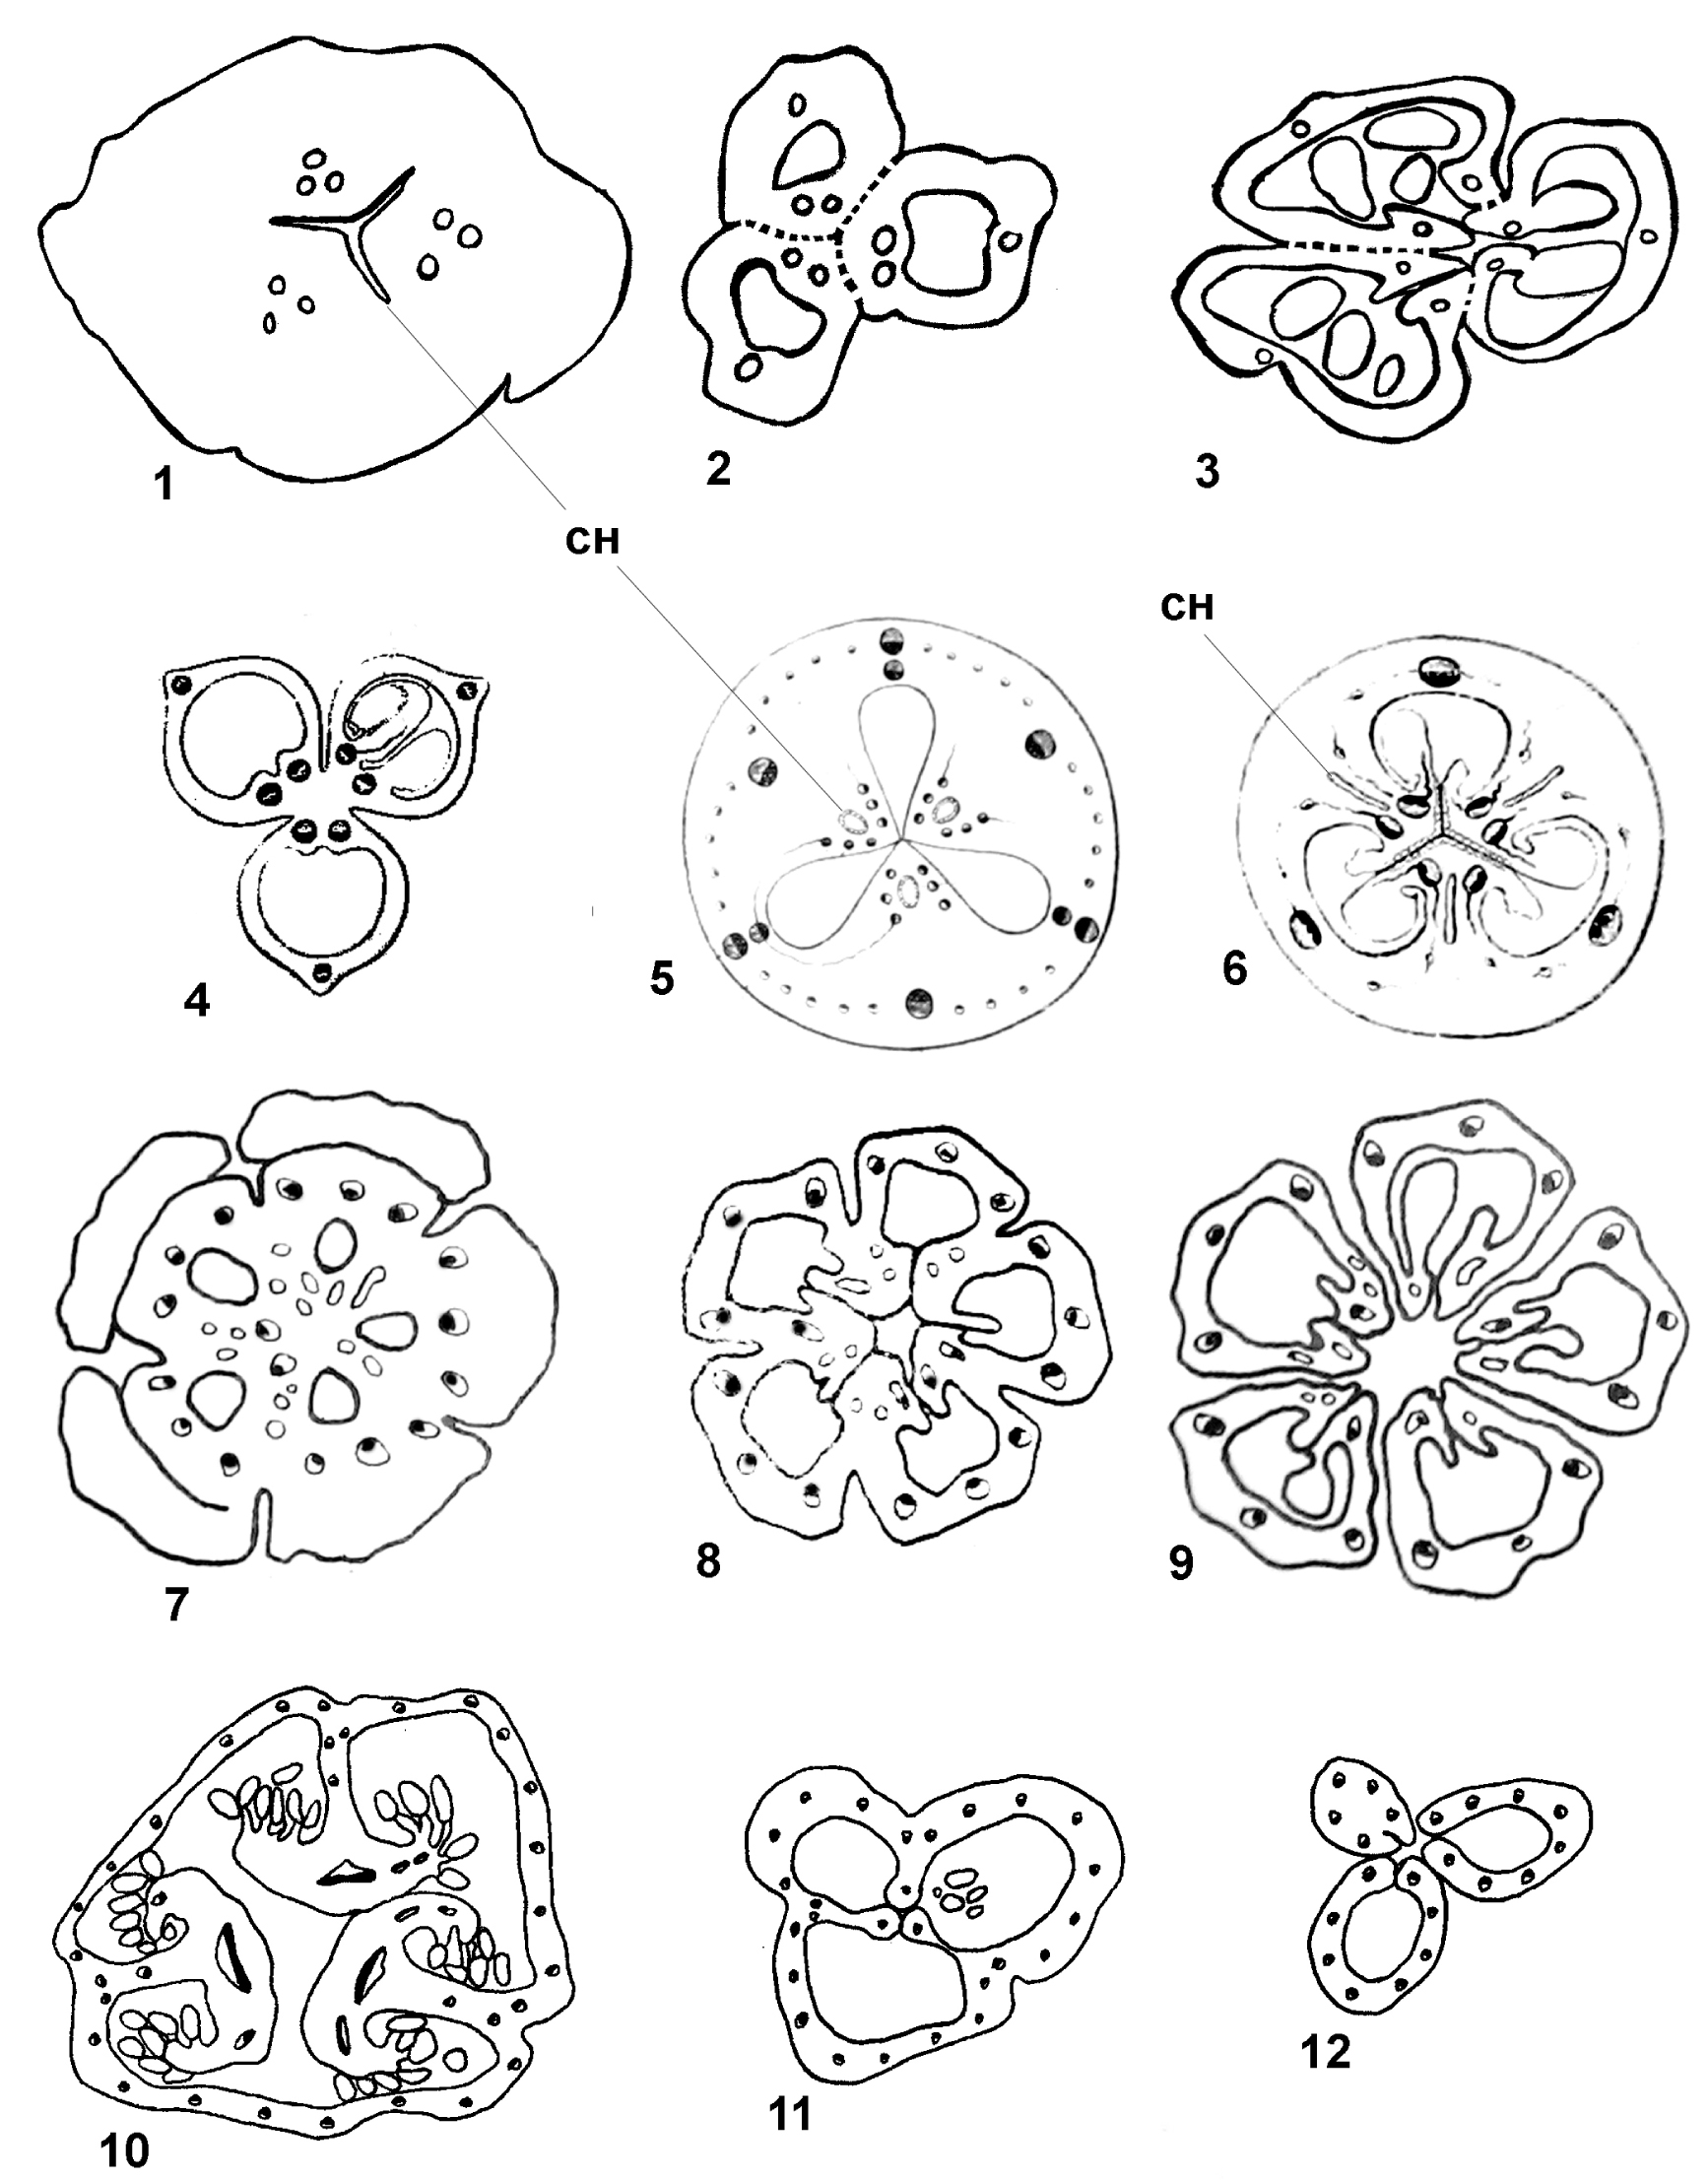 Fig. 1. Schematic structure of the gynoecium at the levels of various structural zones: Tofieldia calyculata (L.) Wahlenb. (А-В), Helleborus foetidus L. (Г), Narcissus poeticus L. (Д), Funkia subcordata Spreng. (Е), Adromischus cristatus (Haw.) Lem. (Є-З), Hypericum maculatum Сrantz (И-І). Г-Е from van Tieghem (1875); сн – septal nectary.